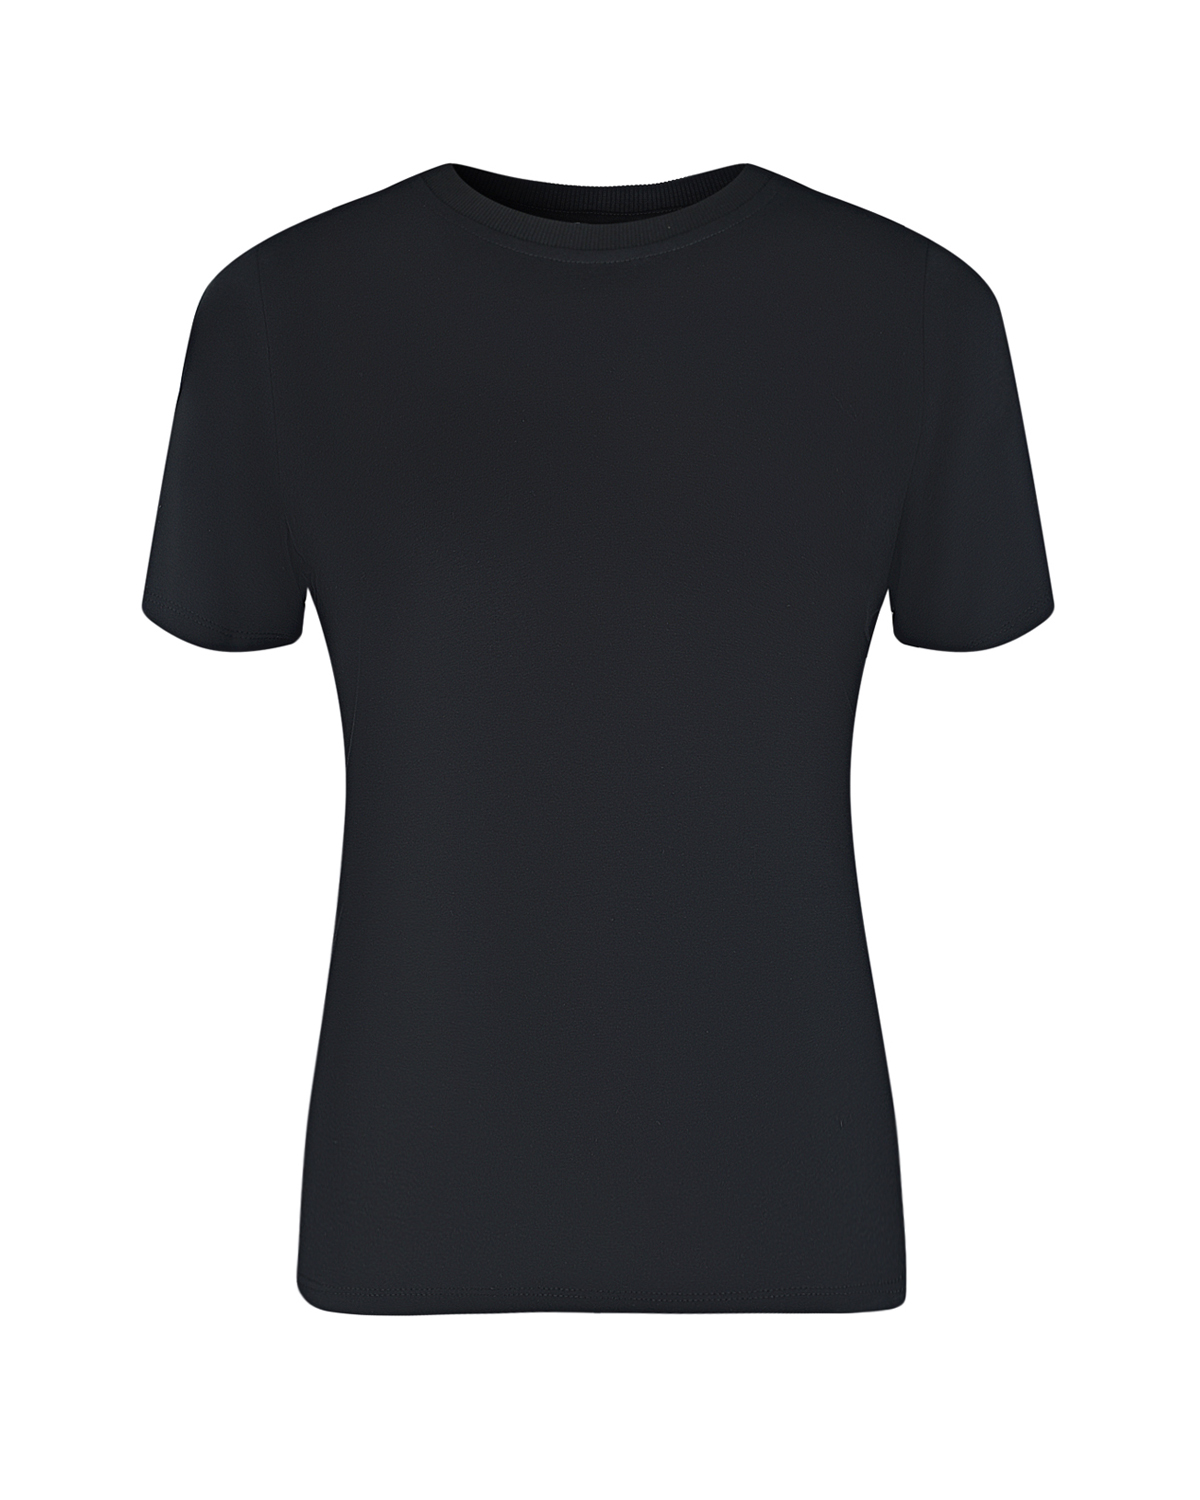 Черная базовая футболка Dan Maralex, размер 44, цвет нет цвета - фото 1